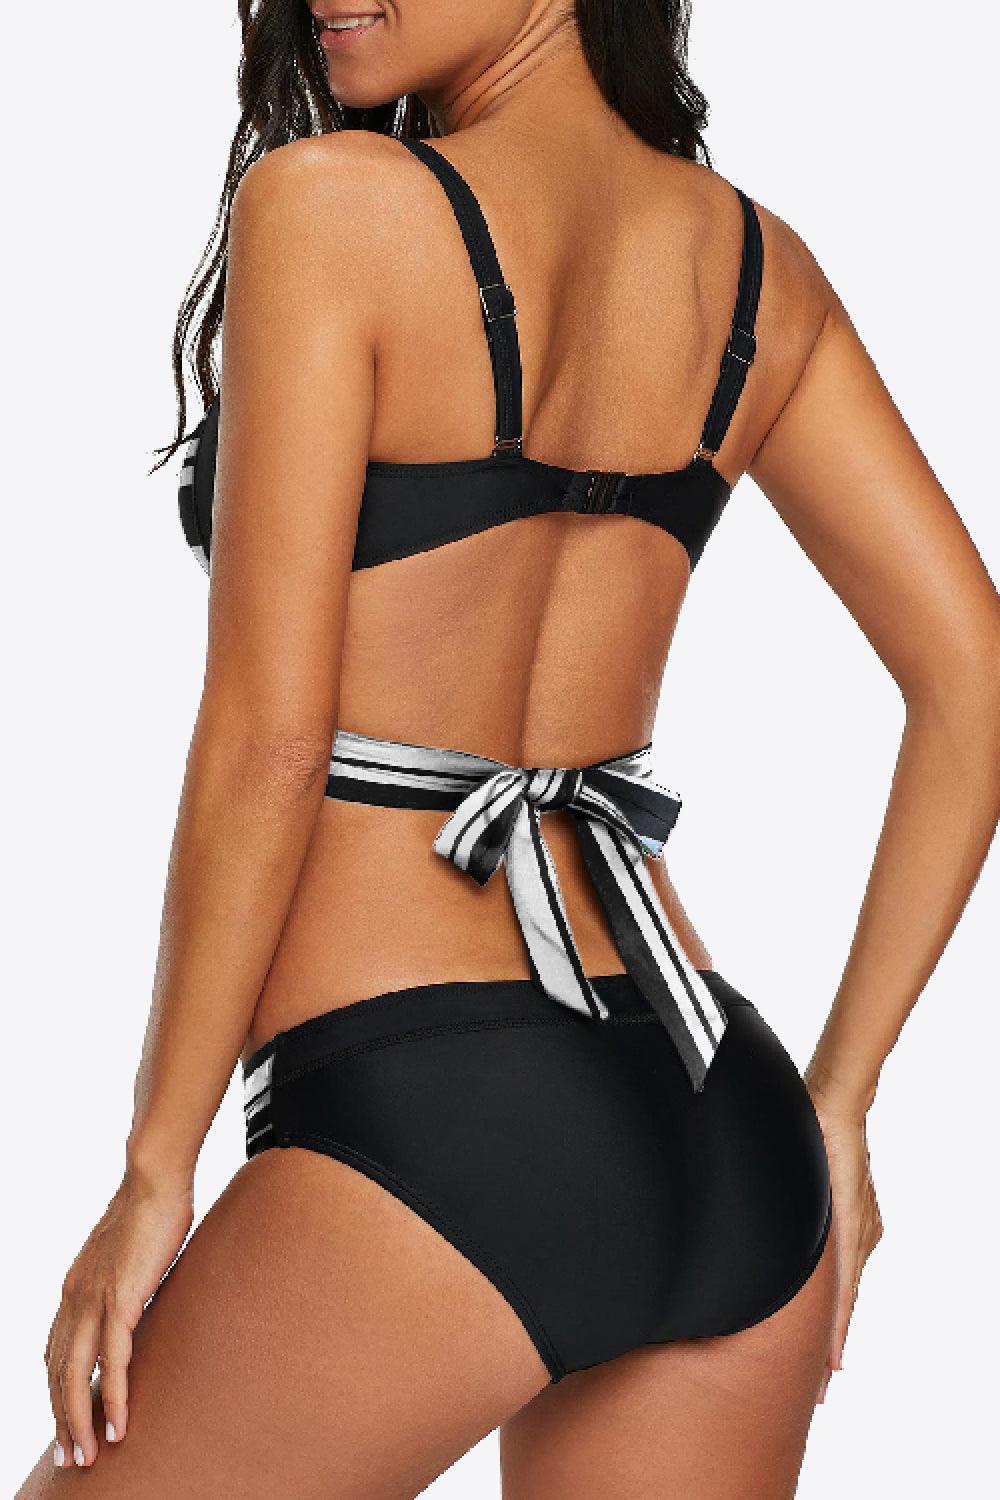 Inherent Elegance Crisscross Tie-Back Striped Bikini Set - MXSTUDIO.COM